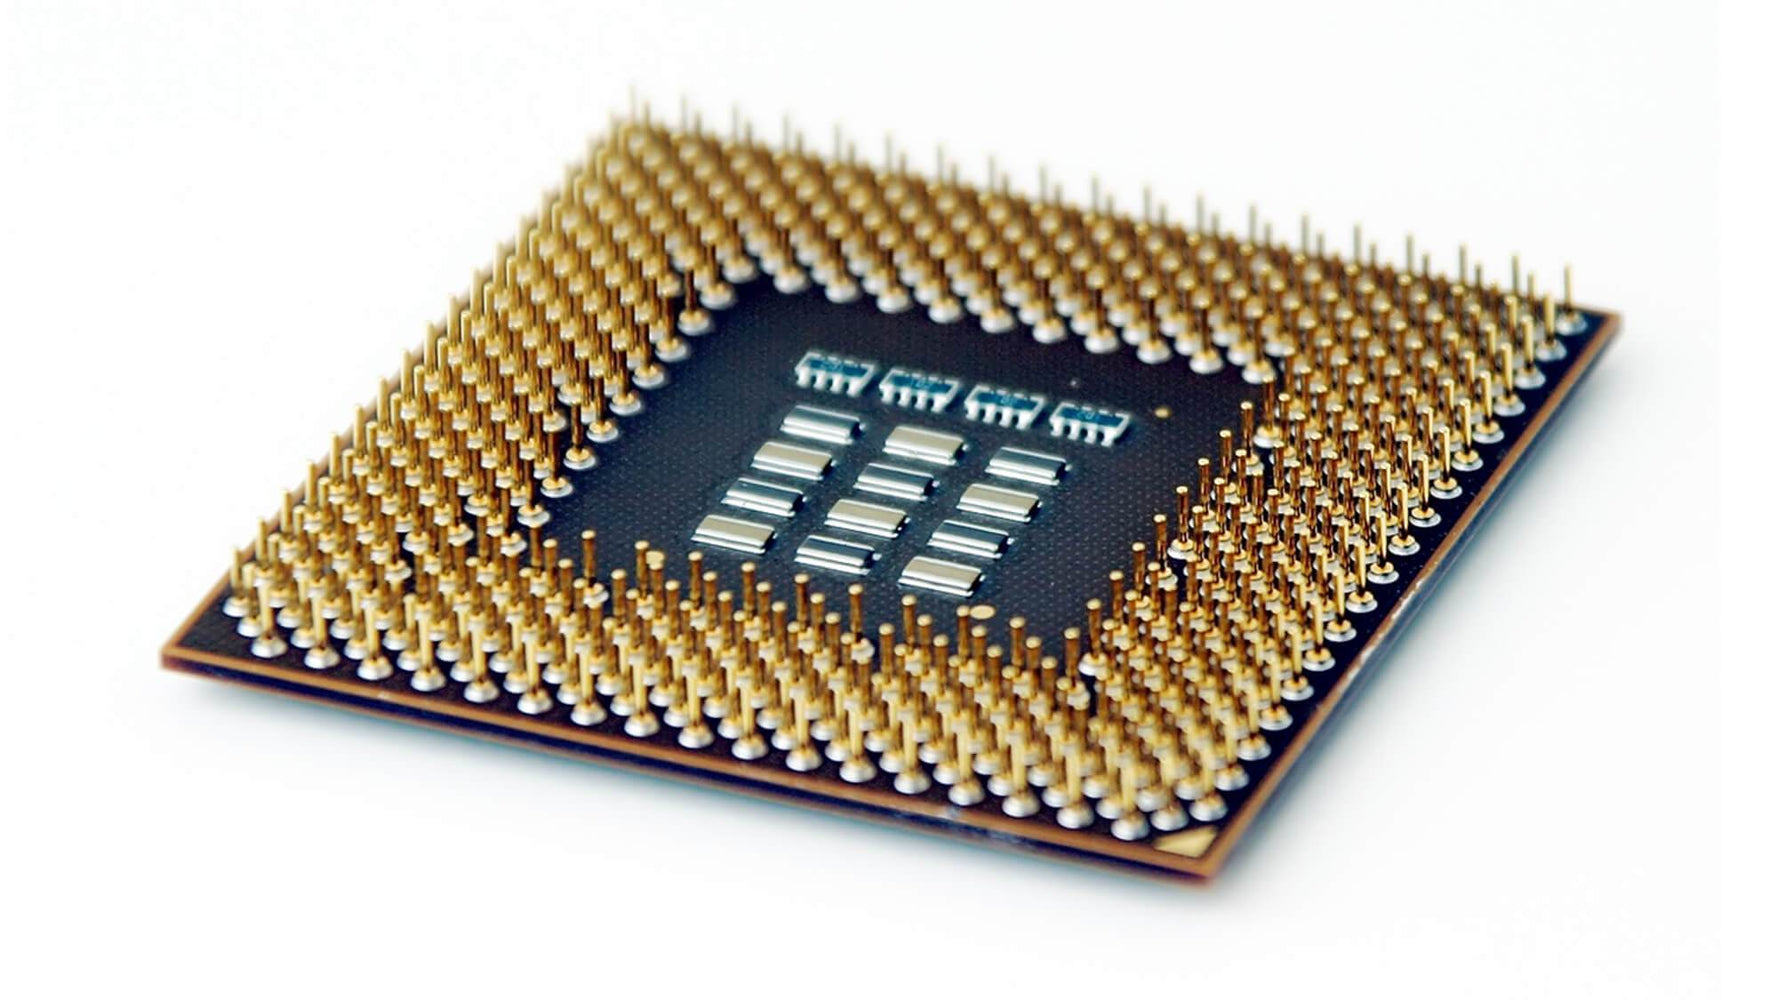 765141-001 - HP 3.00GHz 5GT/s DMI2 4MB SmartCache Intel Core i7-4610M Dual Core Processor